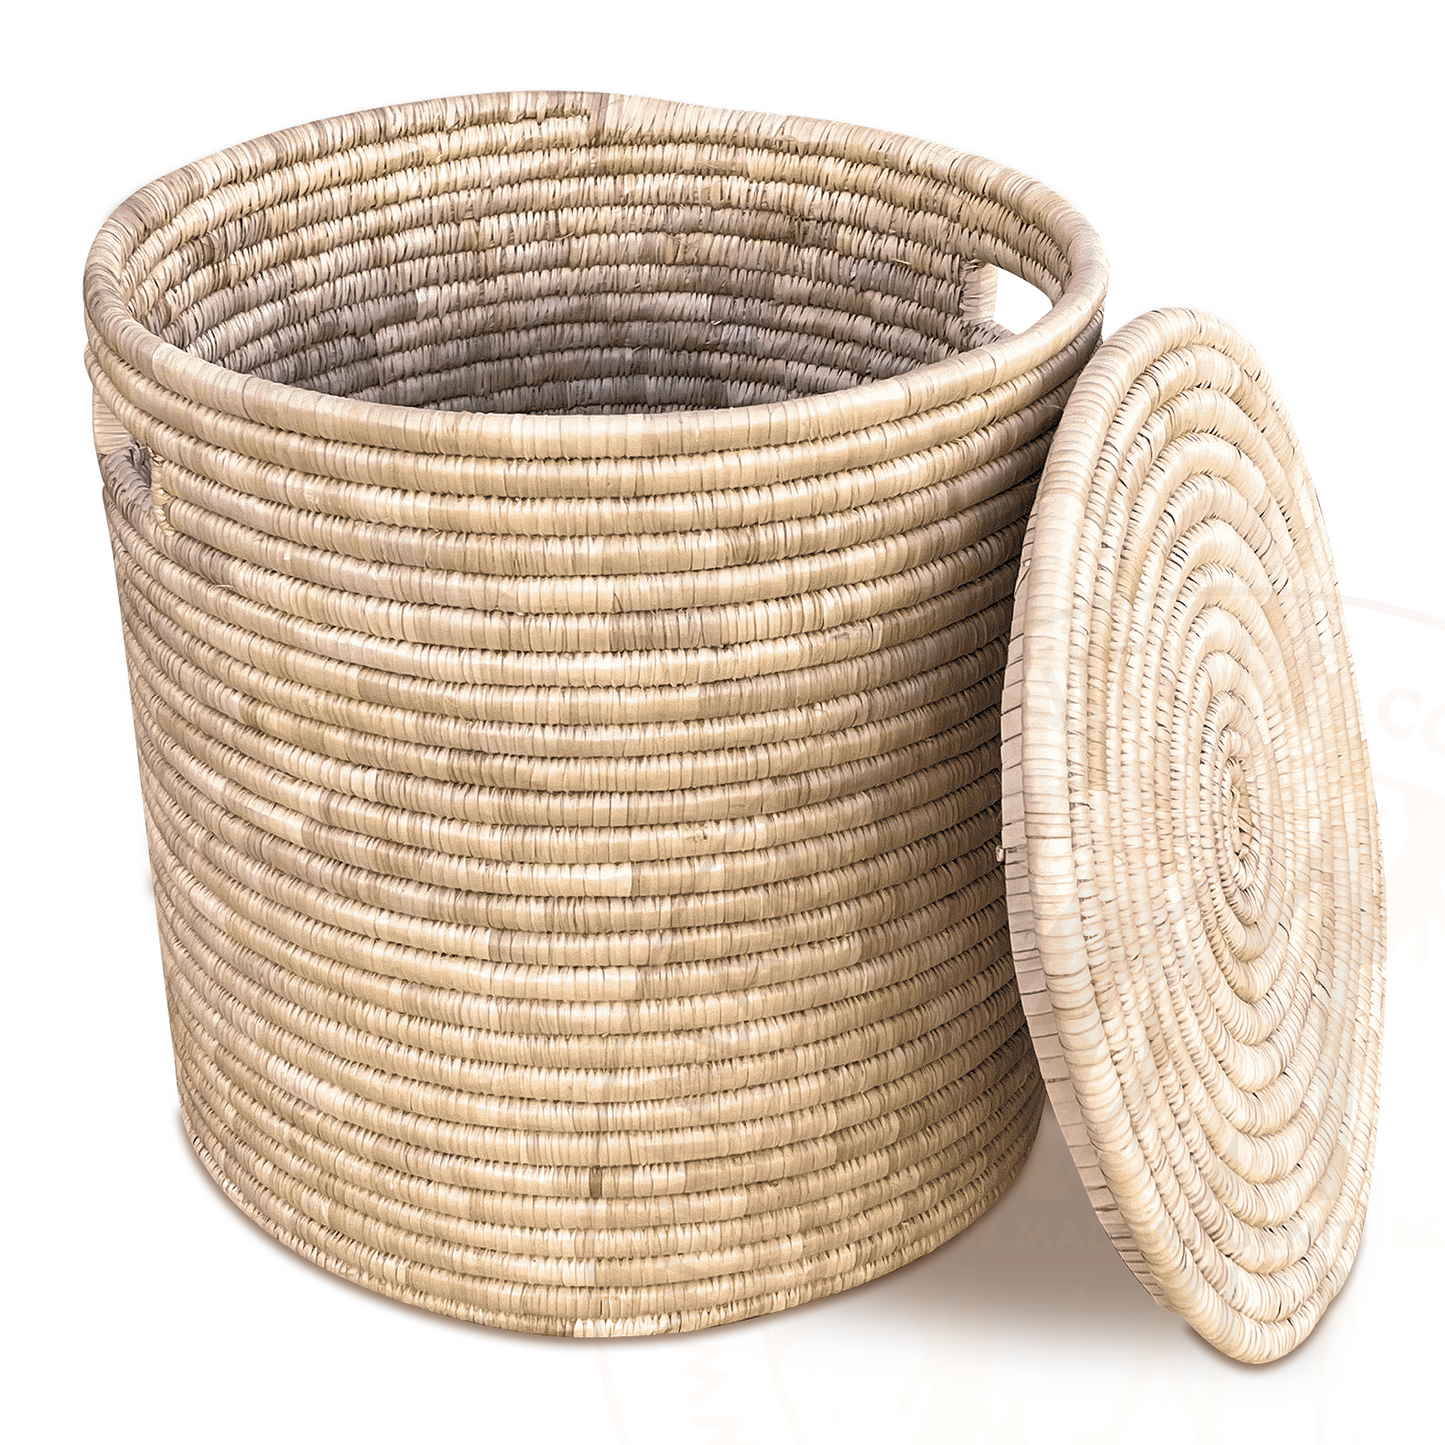 Malawi Laundry Baskets (SET OF 3) Storage Toys Towels Linen Box Weave Woven Basket - Large open